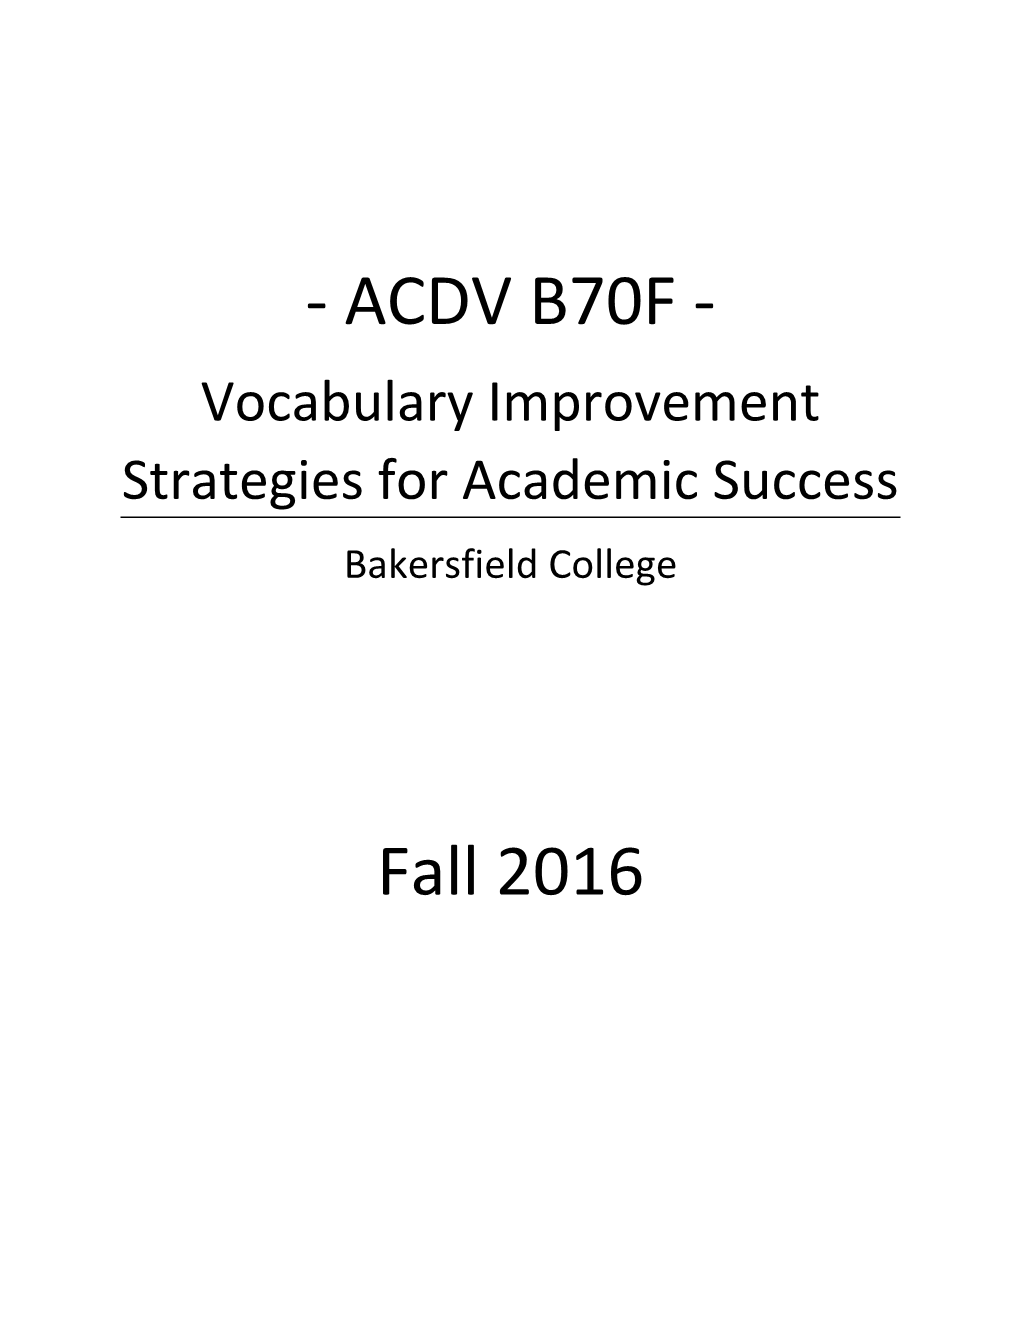 Vocabulary Improvement Strategies for Academic Success